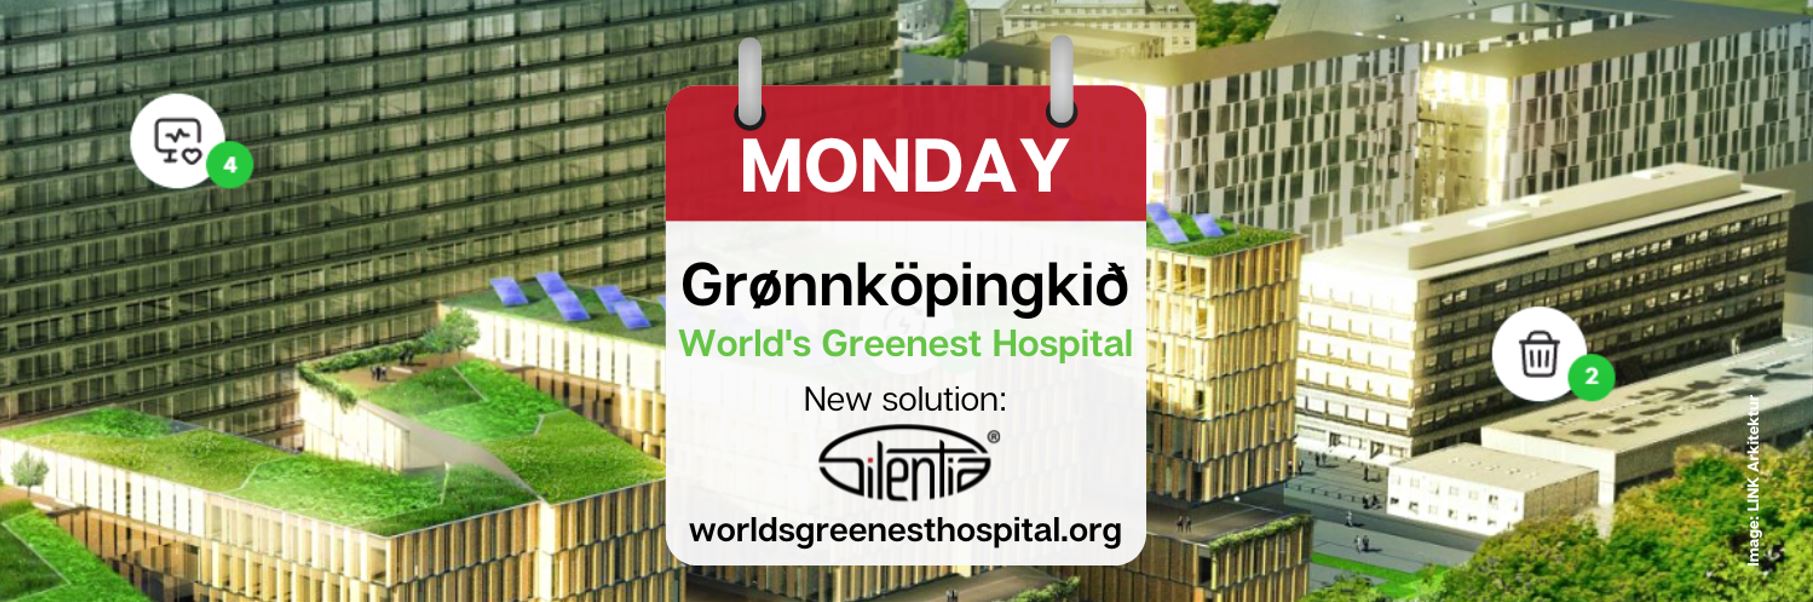 Grønnköpingkið Monday: New Solution From Silentia